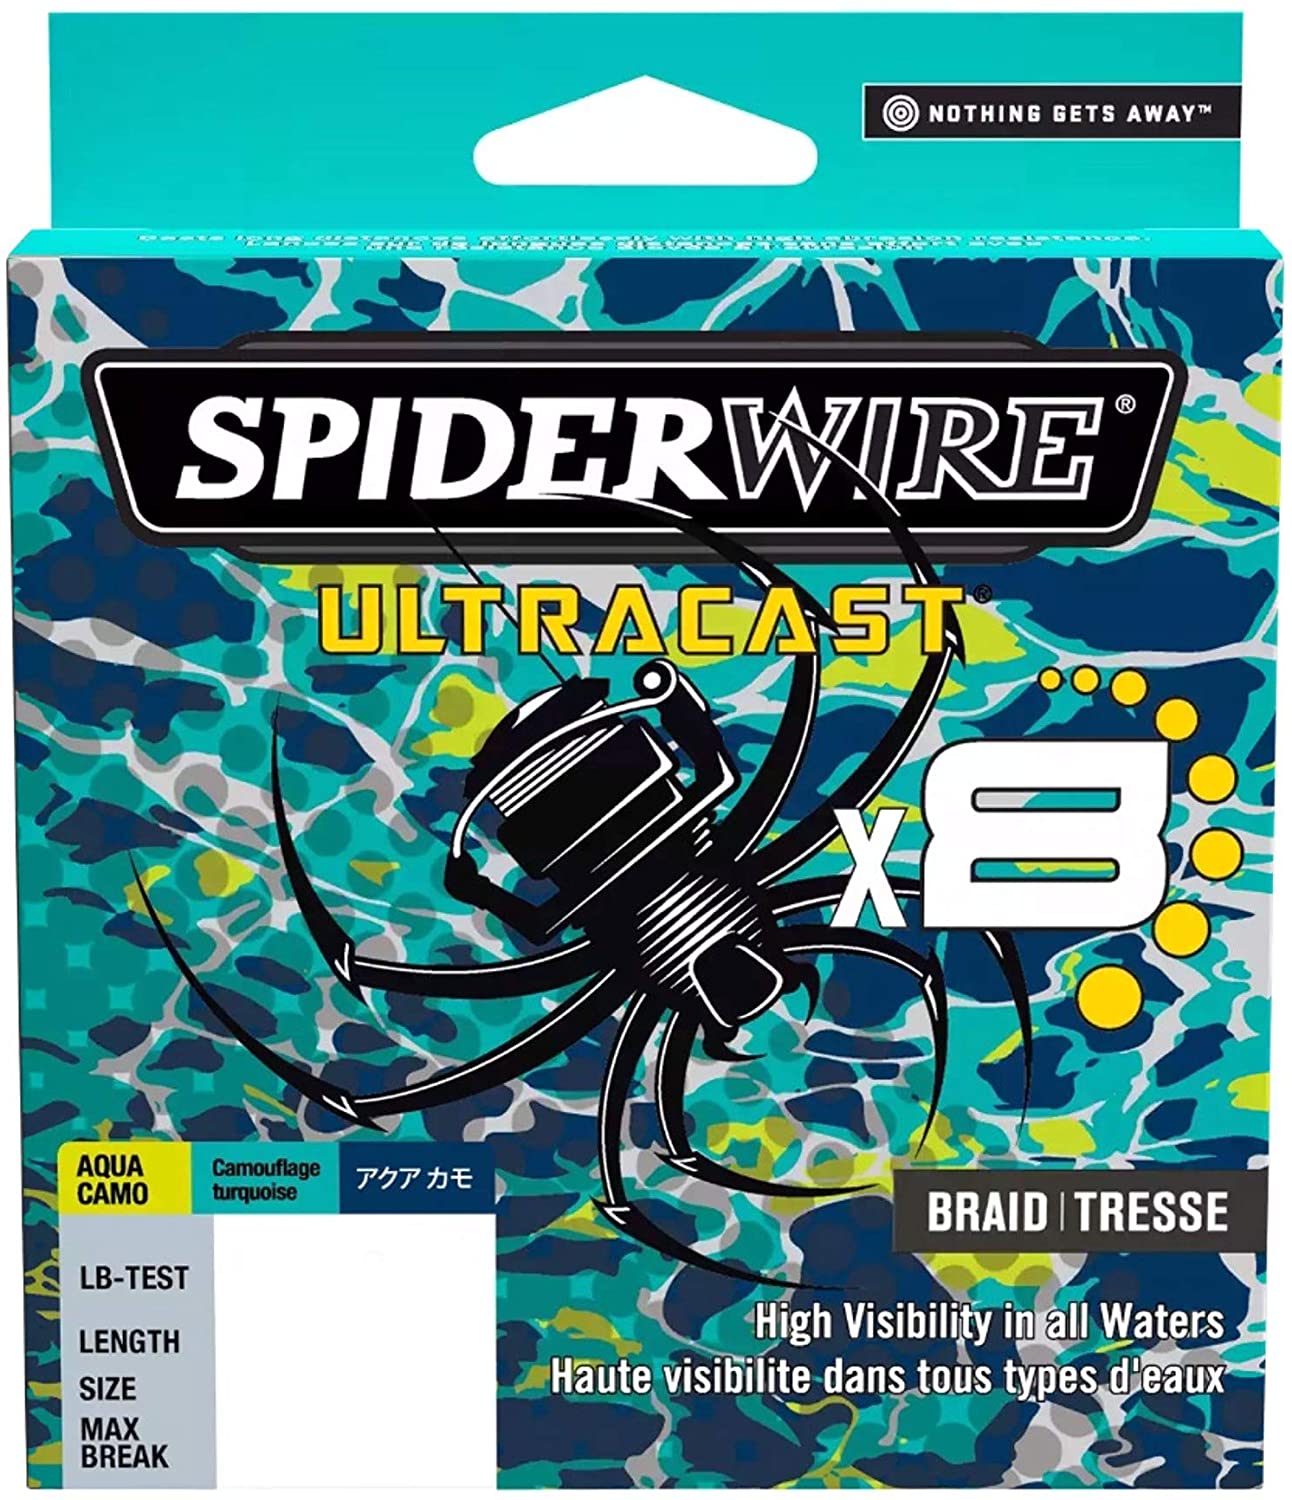 Spiderwire Stealth Blue Camo Braid, Size: 100 lbs